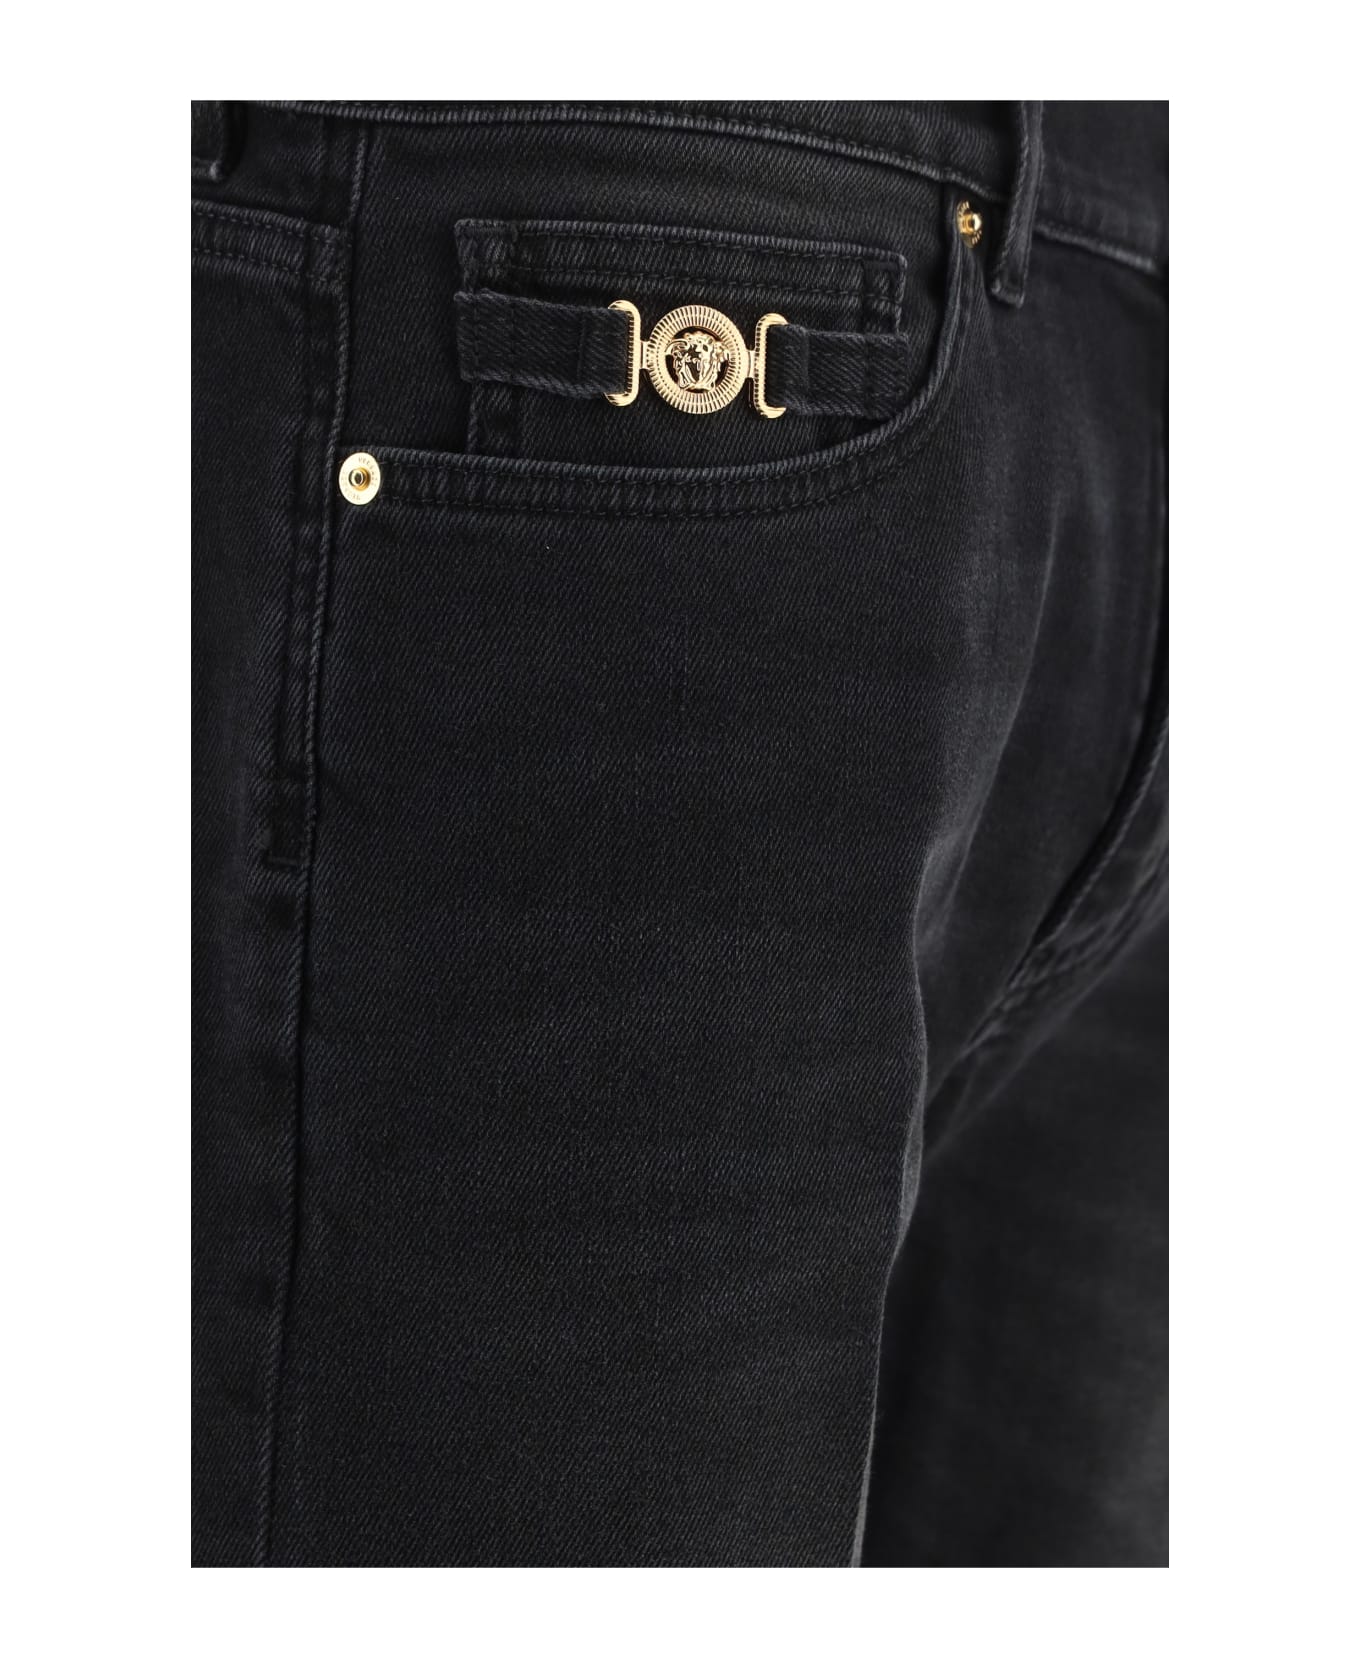 Versace Stretch Denim Slim Fit Jeans - Faded Washed Black